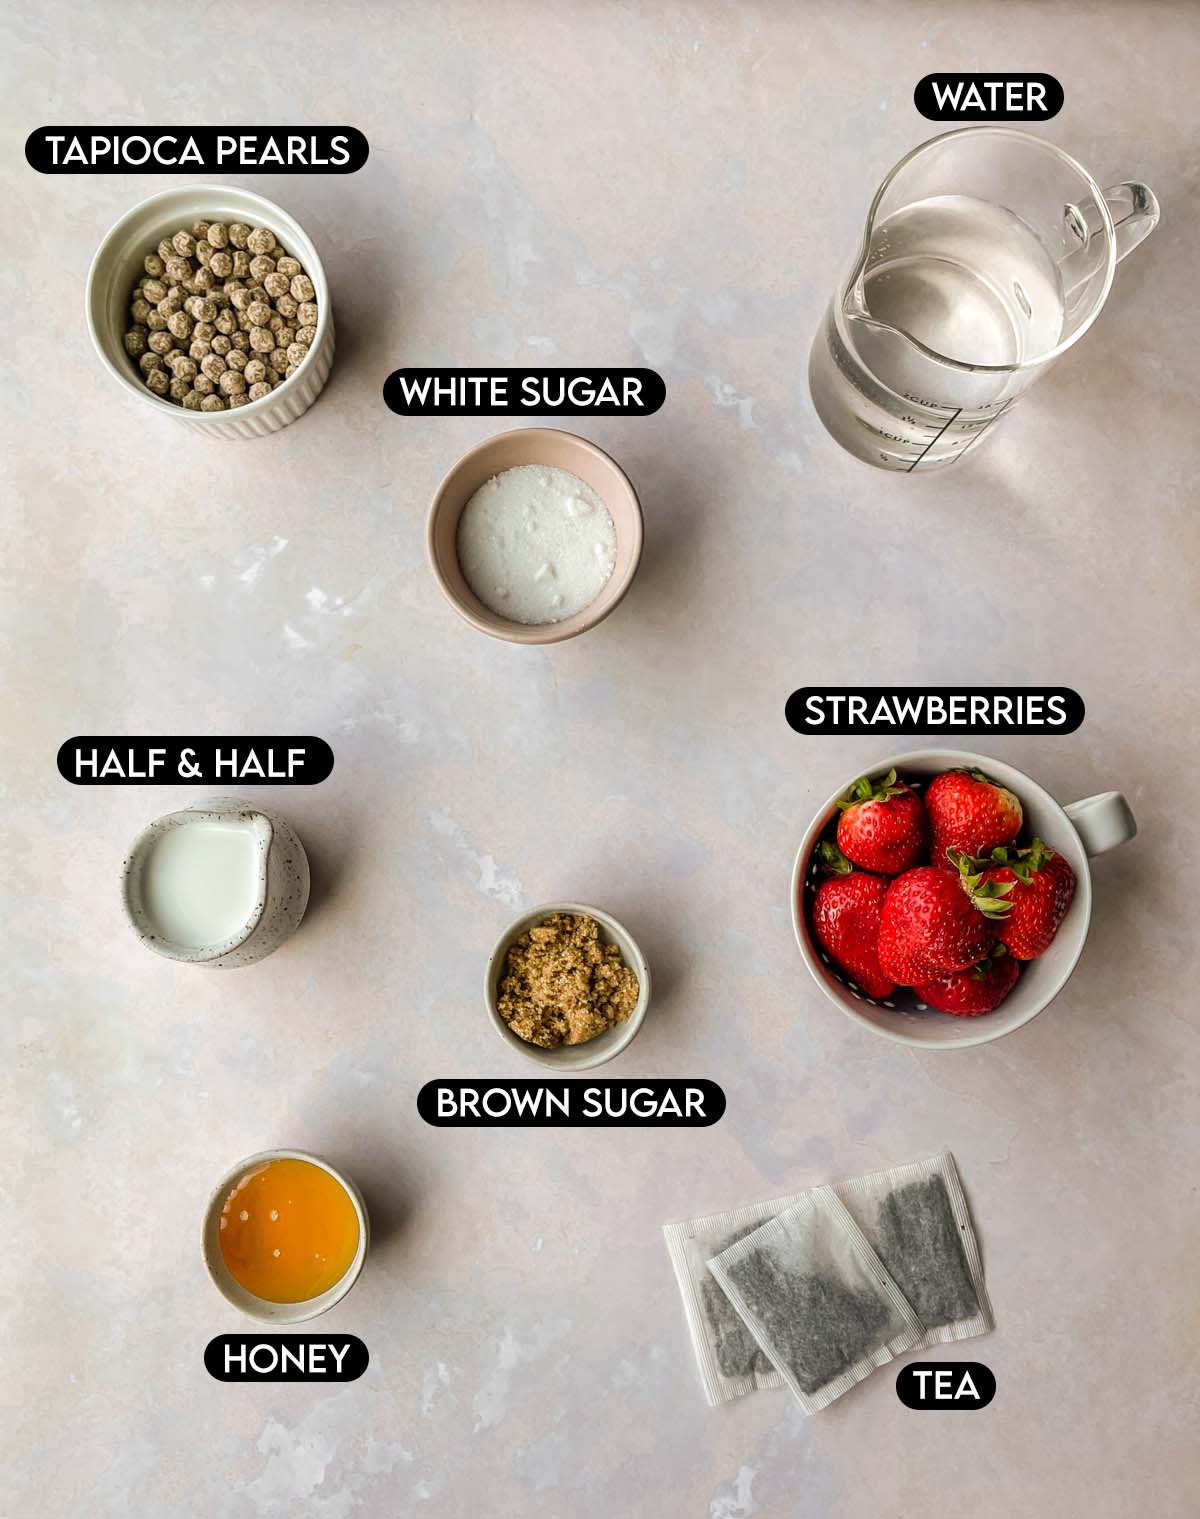 Labeled ingredients for strawberry milk tea: tapioca pearls, white sugar, water, half & half, strawberries, brown sugar, honey, & tea.